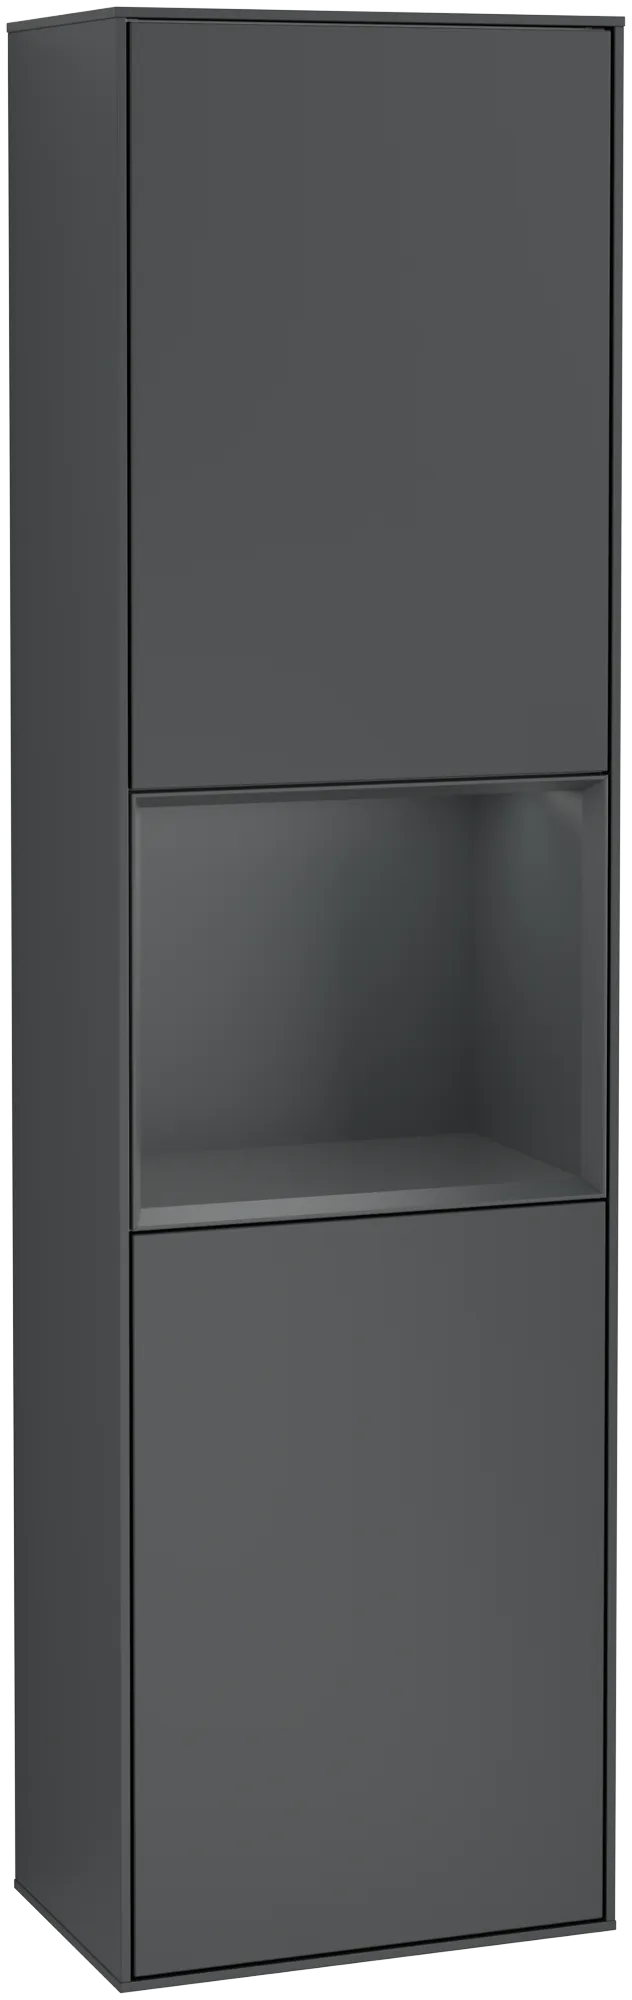 Picture of VILLEROY BOCH Finion Tall cabinet, with lighting, 2 doors, 418 x 1516 x 270 mm, Midnight Blue Matt Lacquer / Midnight Blue Matt Lacquer #G470HGHG